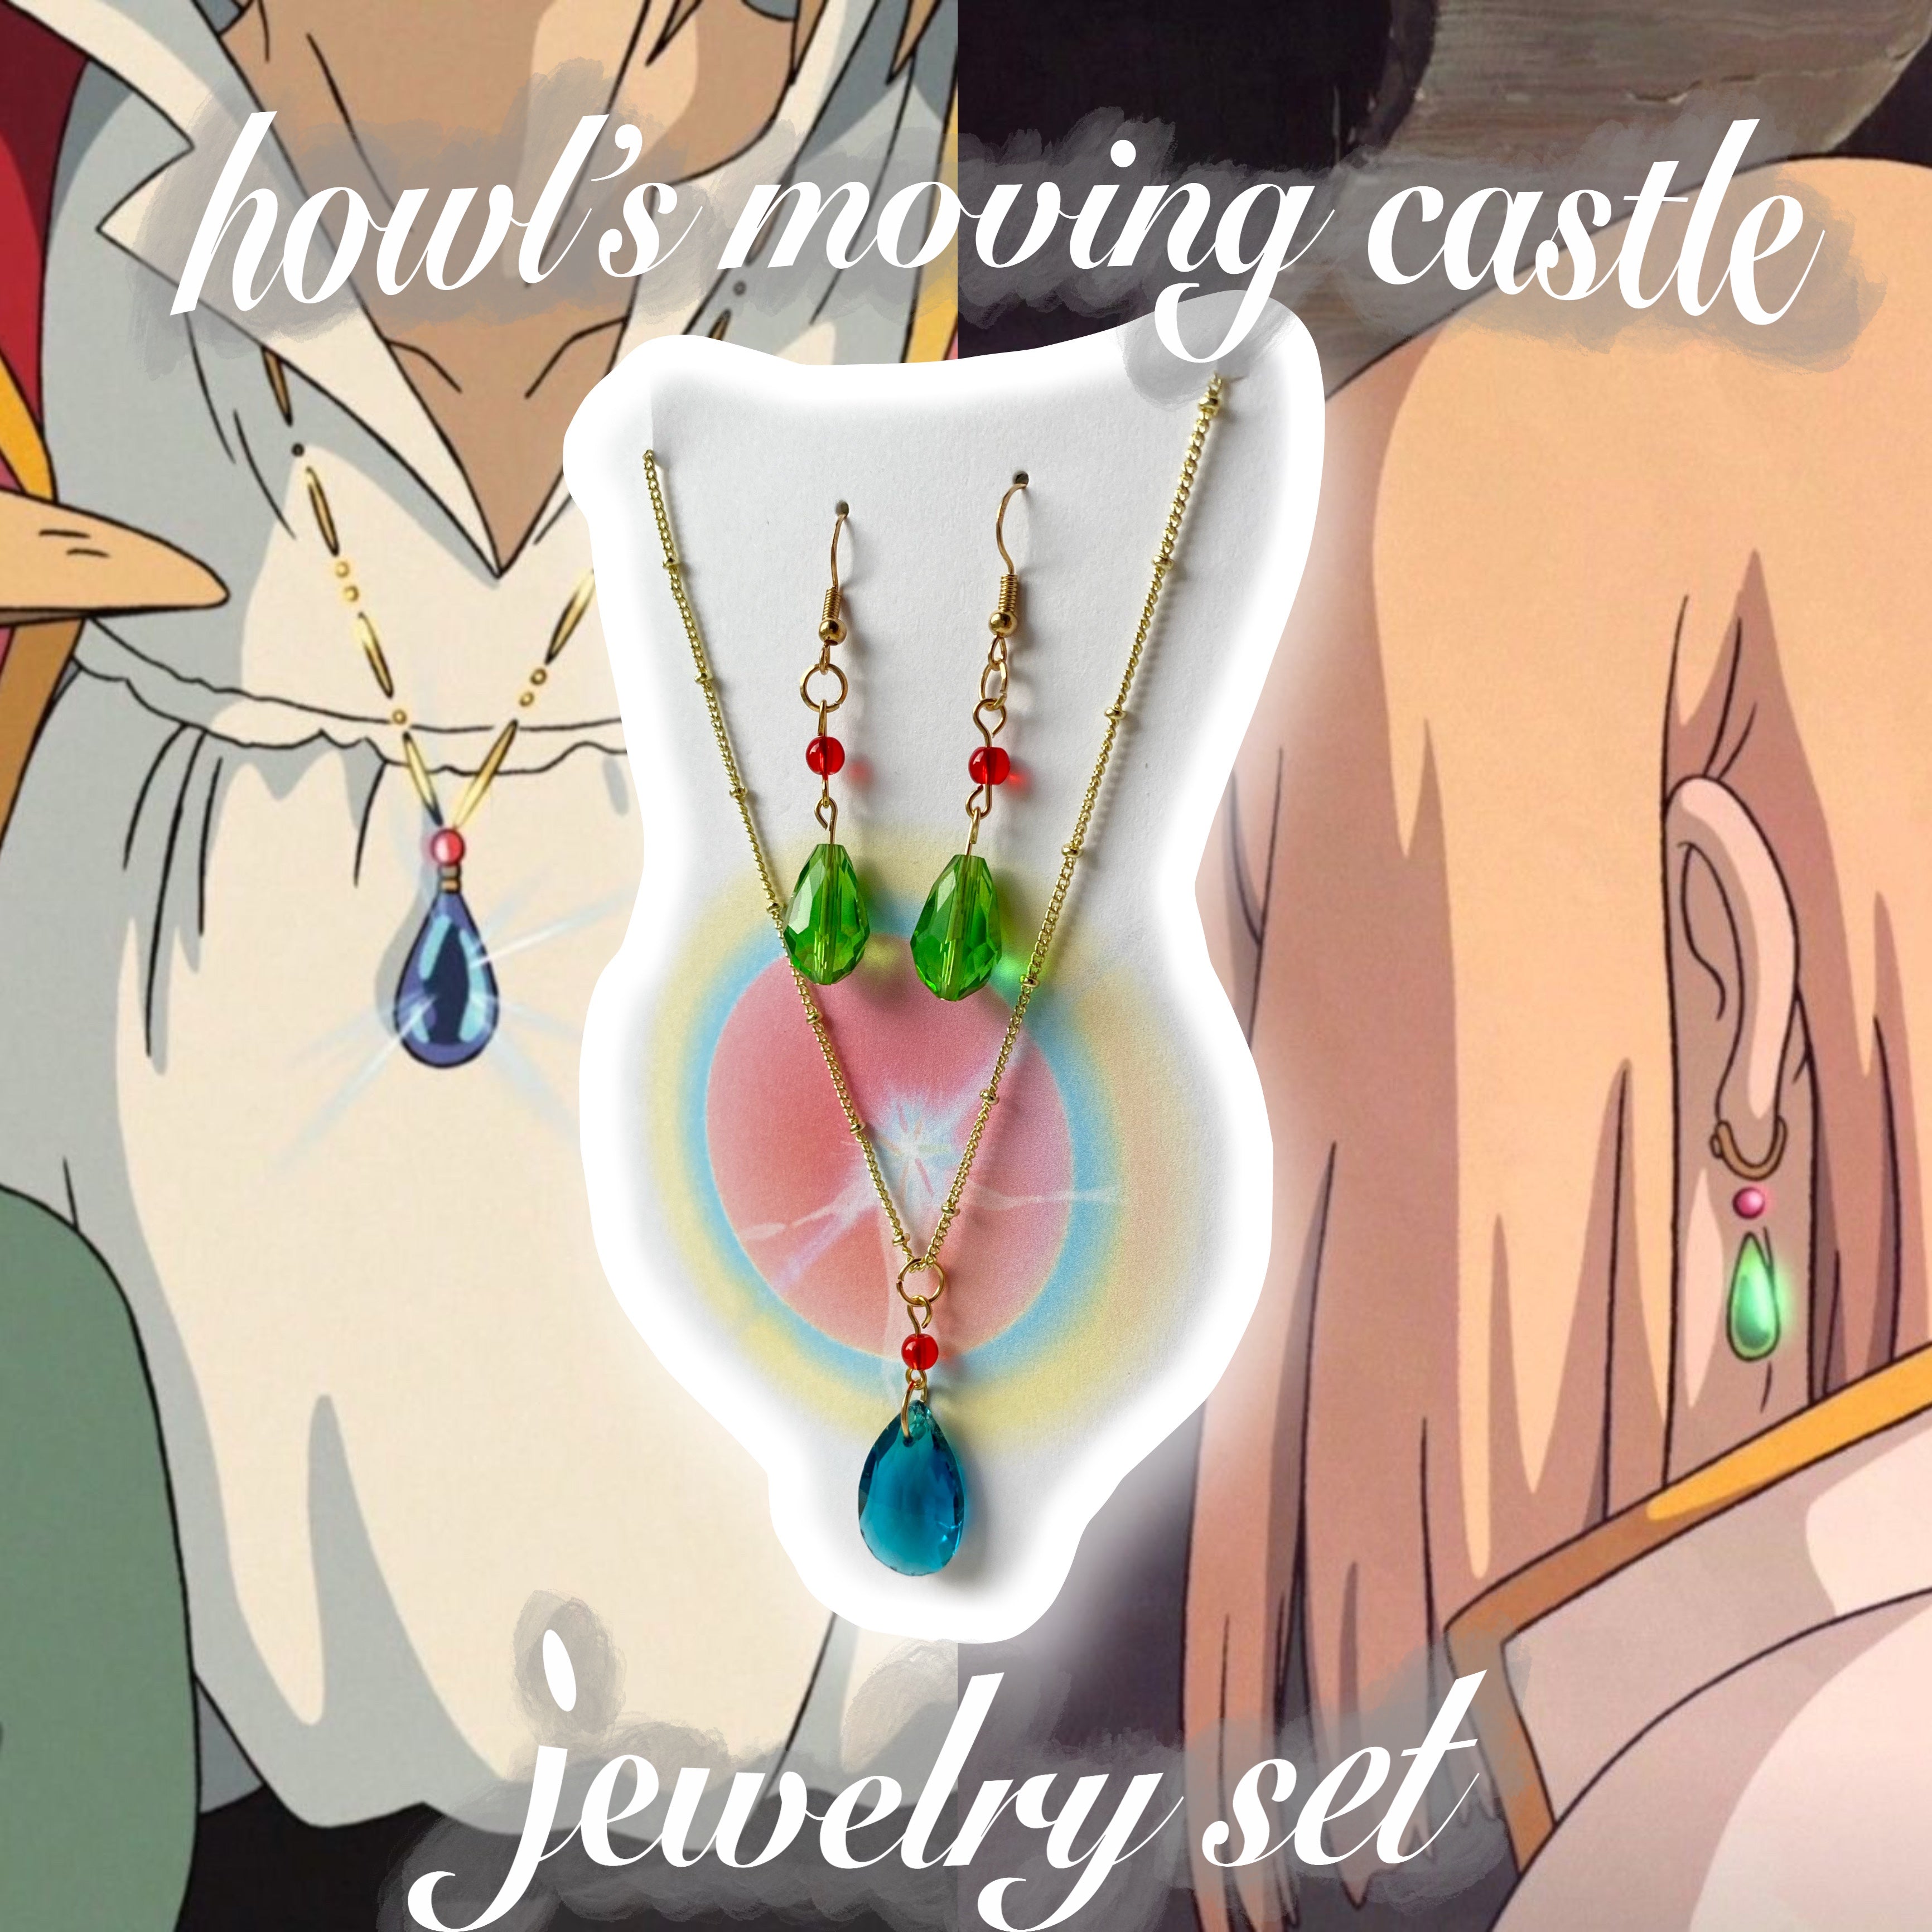 Howl's Moving Castle Necklace and Earring Set | El castillo ambulante howl,  Joyería femenina, Aretes